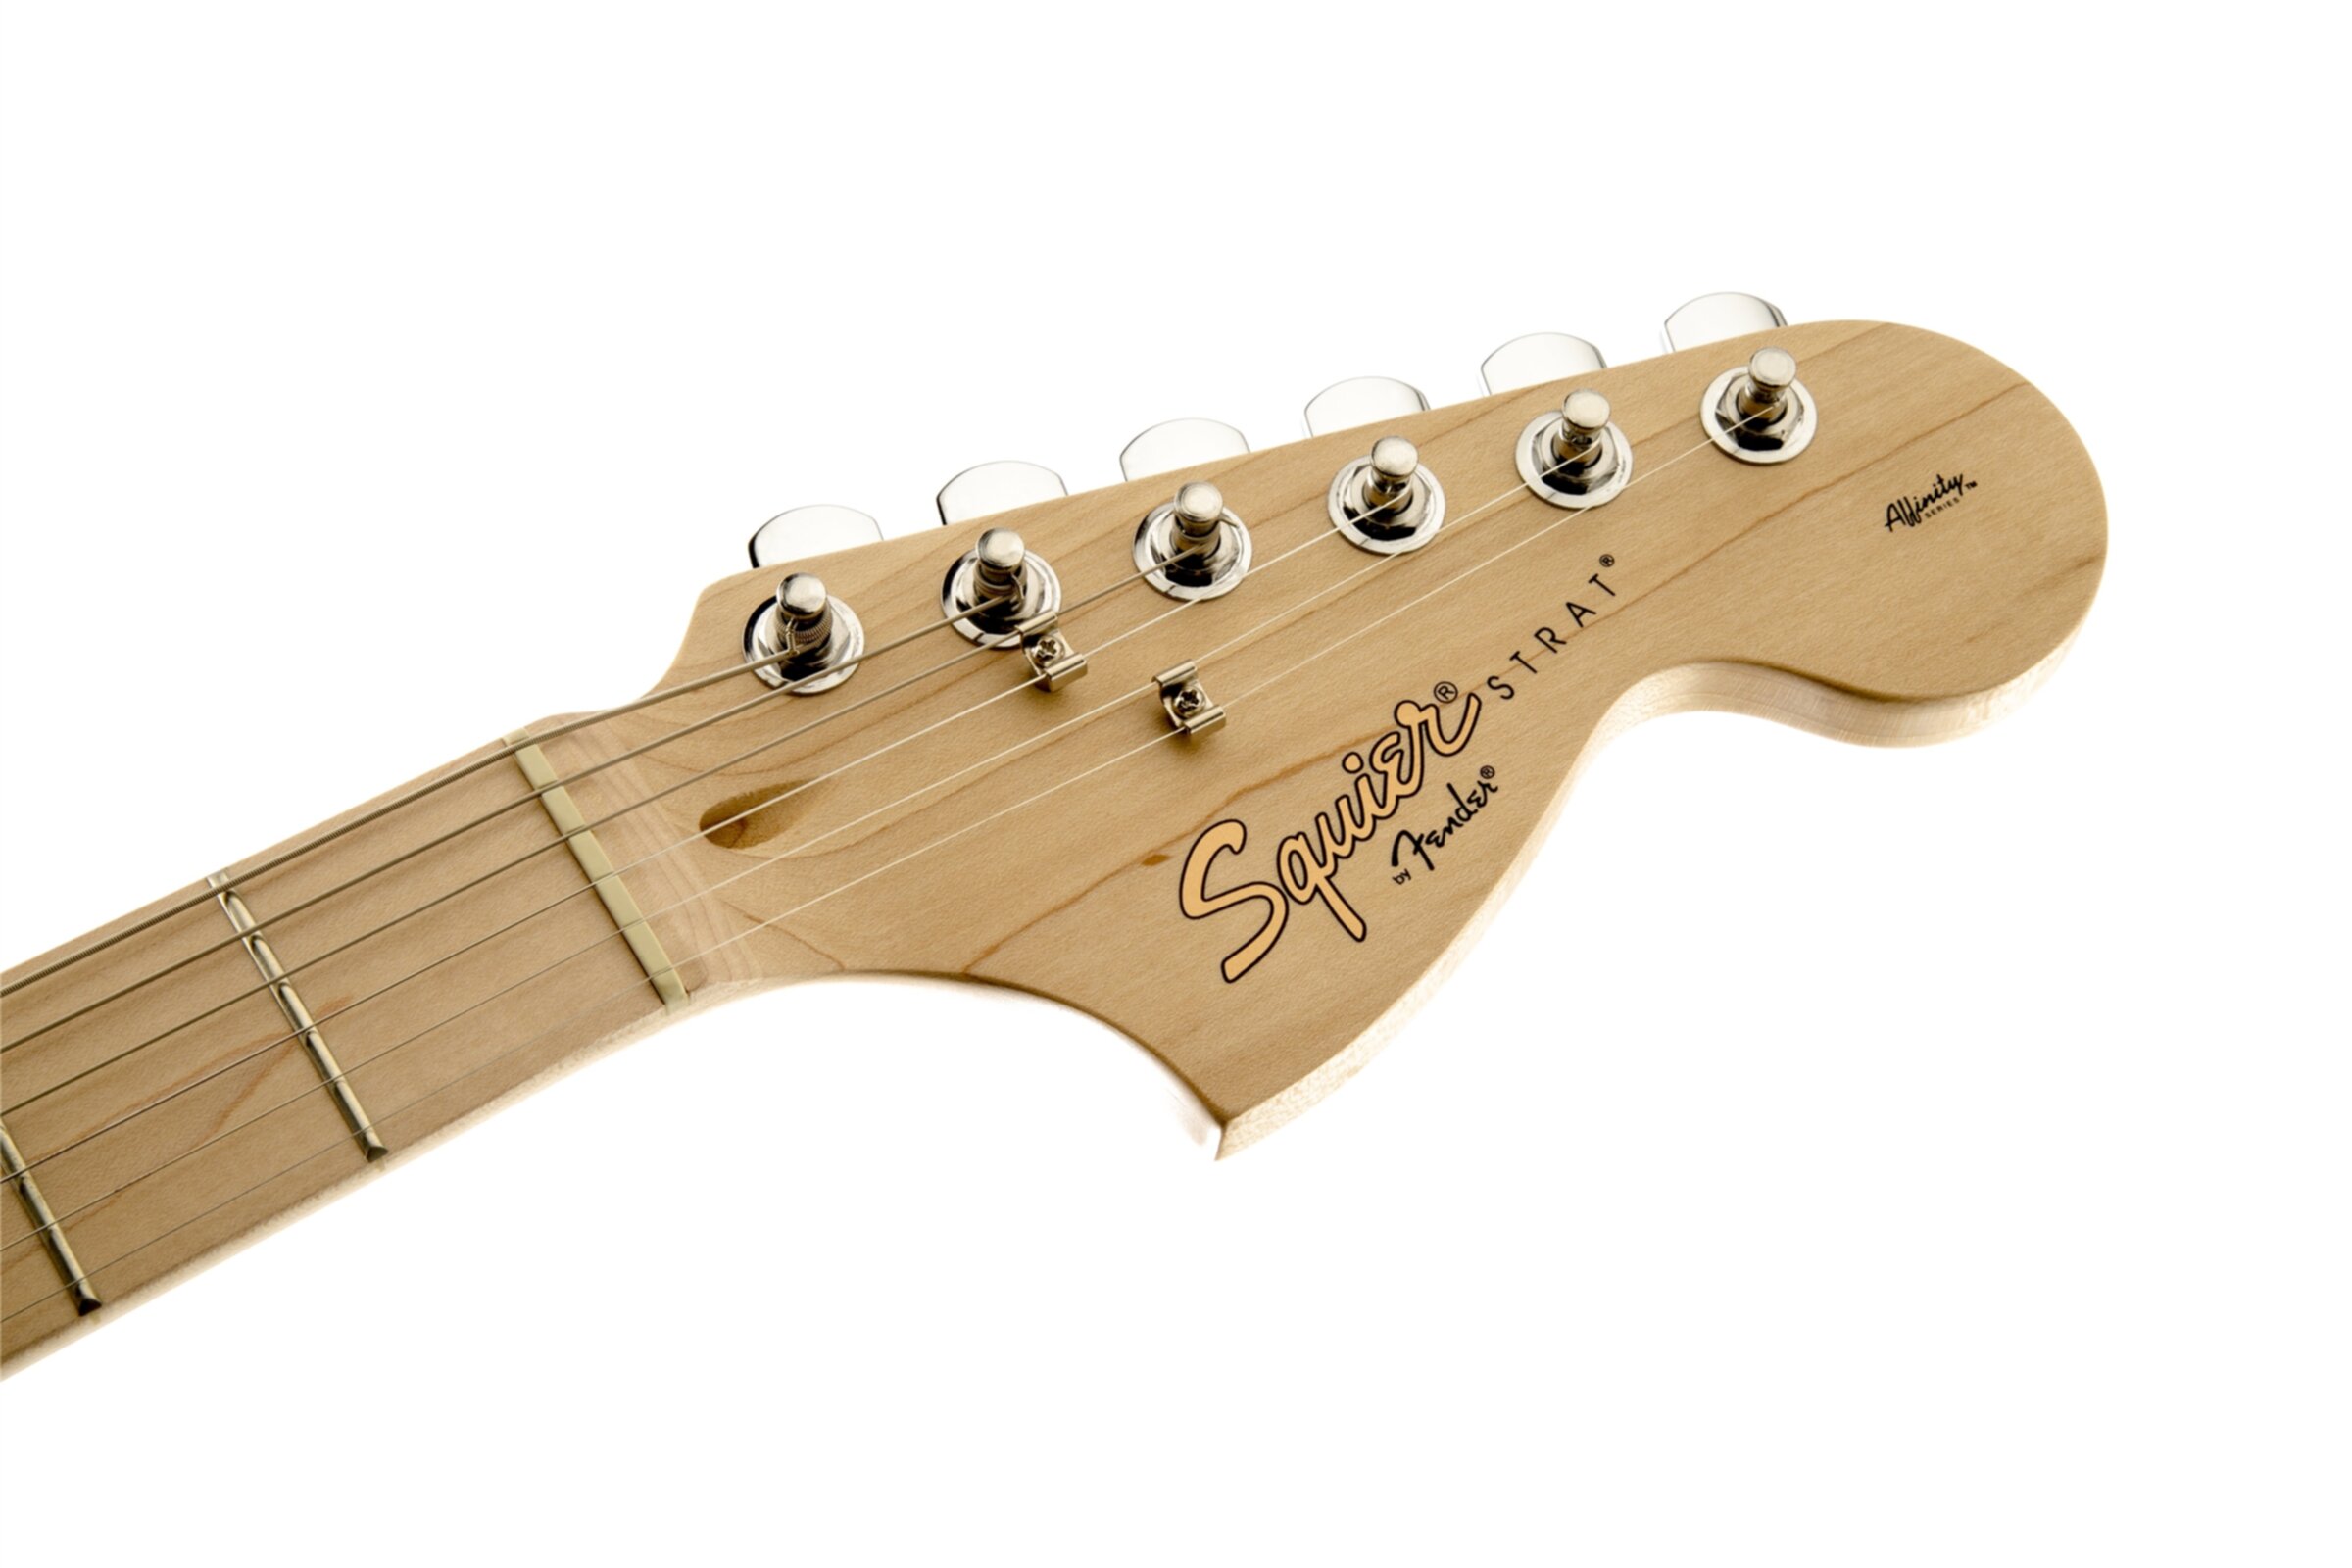 Affinity stratocaster. Гитара Fender Squier Stratocaster Affinity. Электрогитара Fender Squier Affinity. Электрогитара Squier Affinity Stratocaster. Электрогитара Fender Squier Stratocaster.